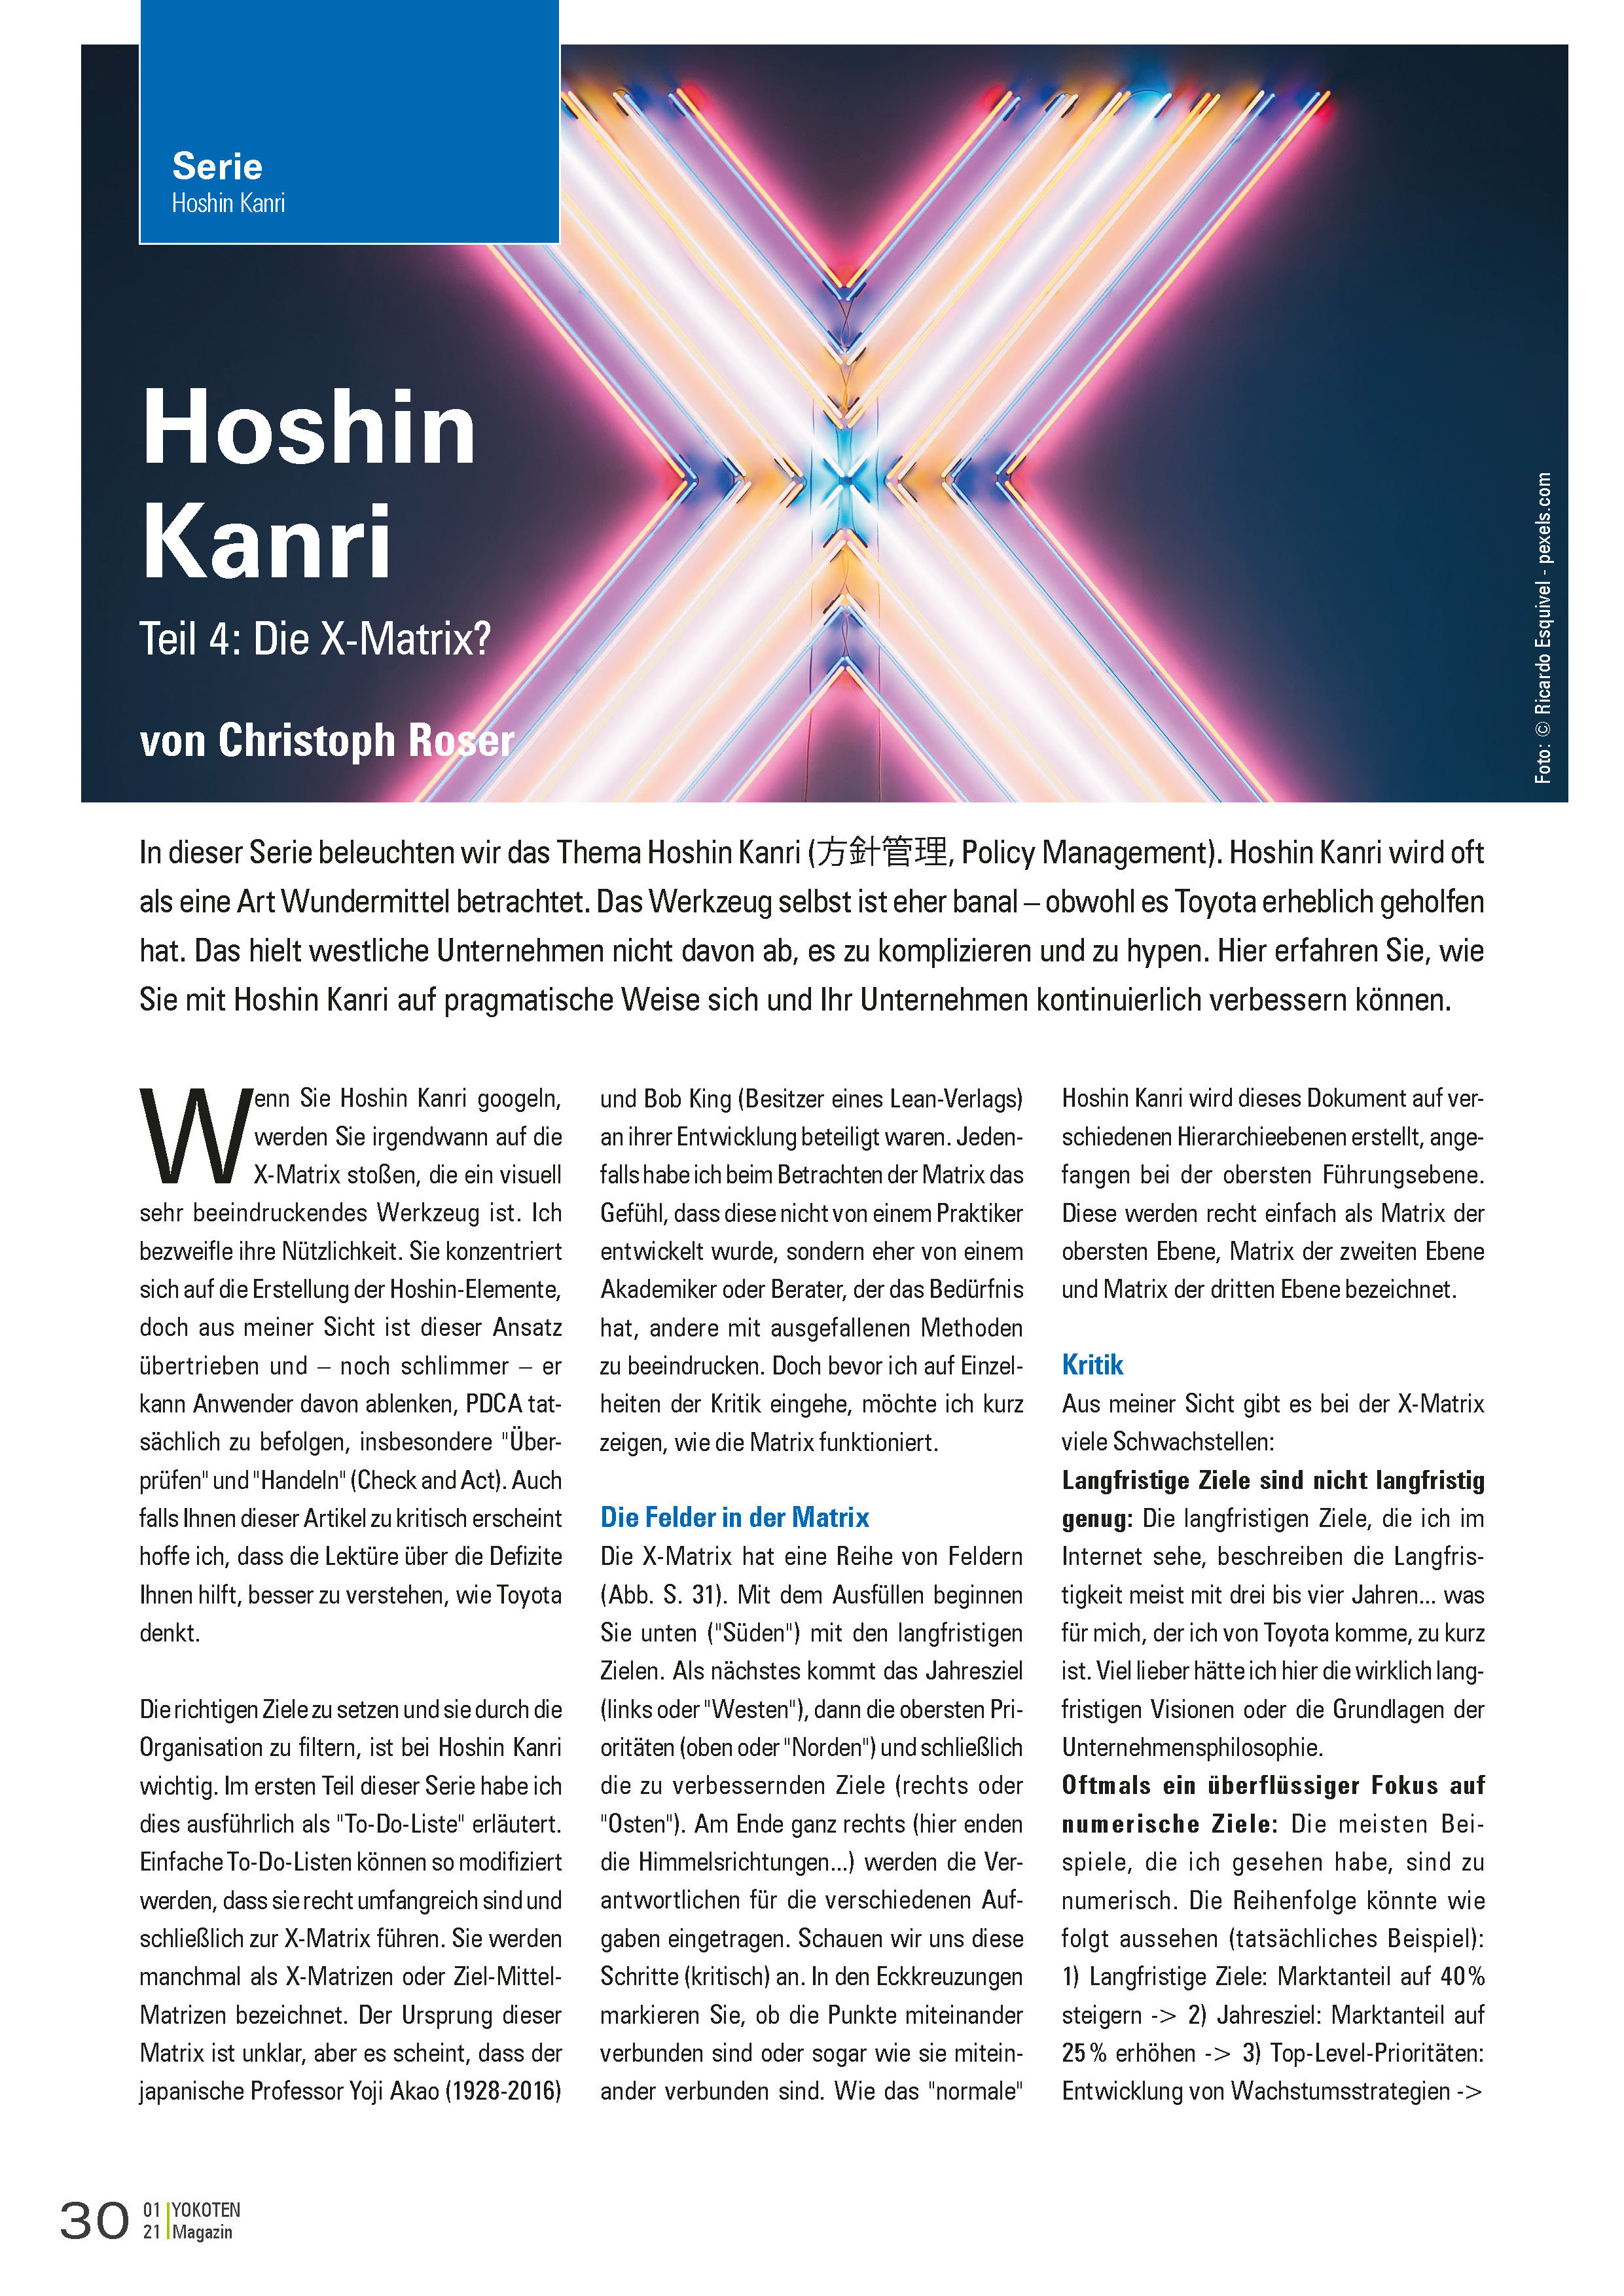 YOKOTEN-Artikel: Hoshin Kanri | Die X-Matrix  - Teil 4 